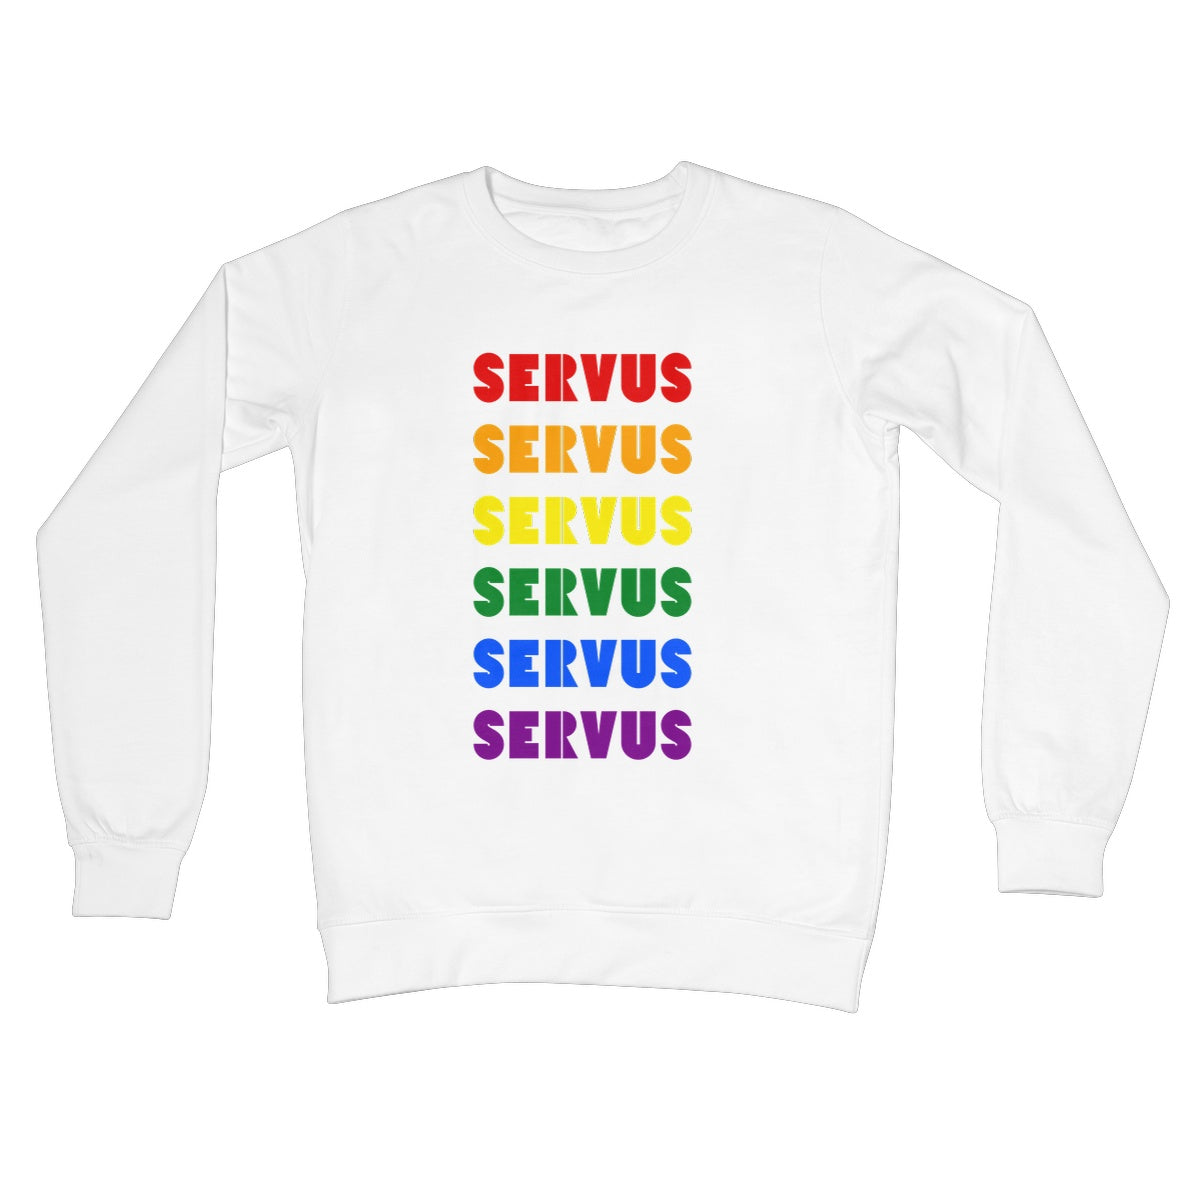 Unisex Bavarian Graphic Sweatshirt "Servus" Rainbow / LGBT print - 6 colours - Bavari Shop - Bavarian Outfits, Dirndl, Lederhosen & Accessories